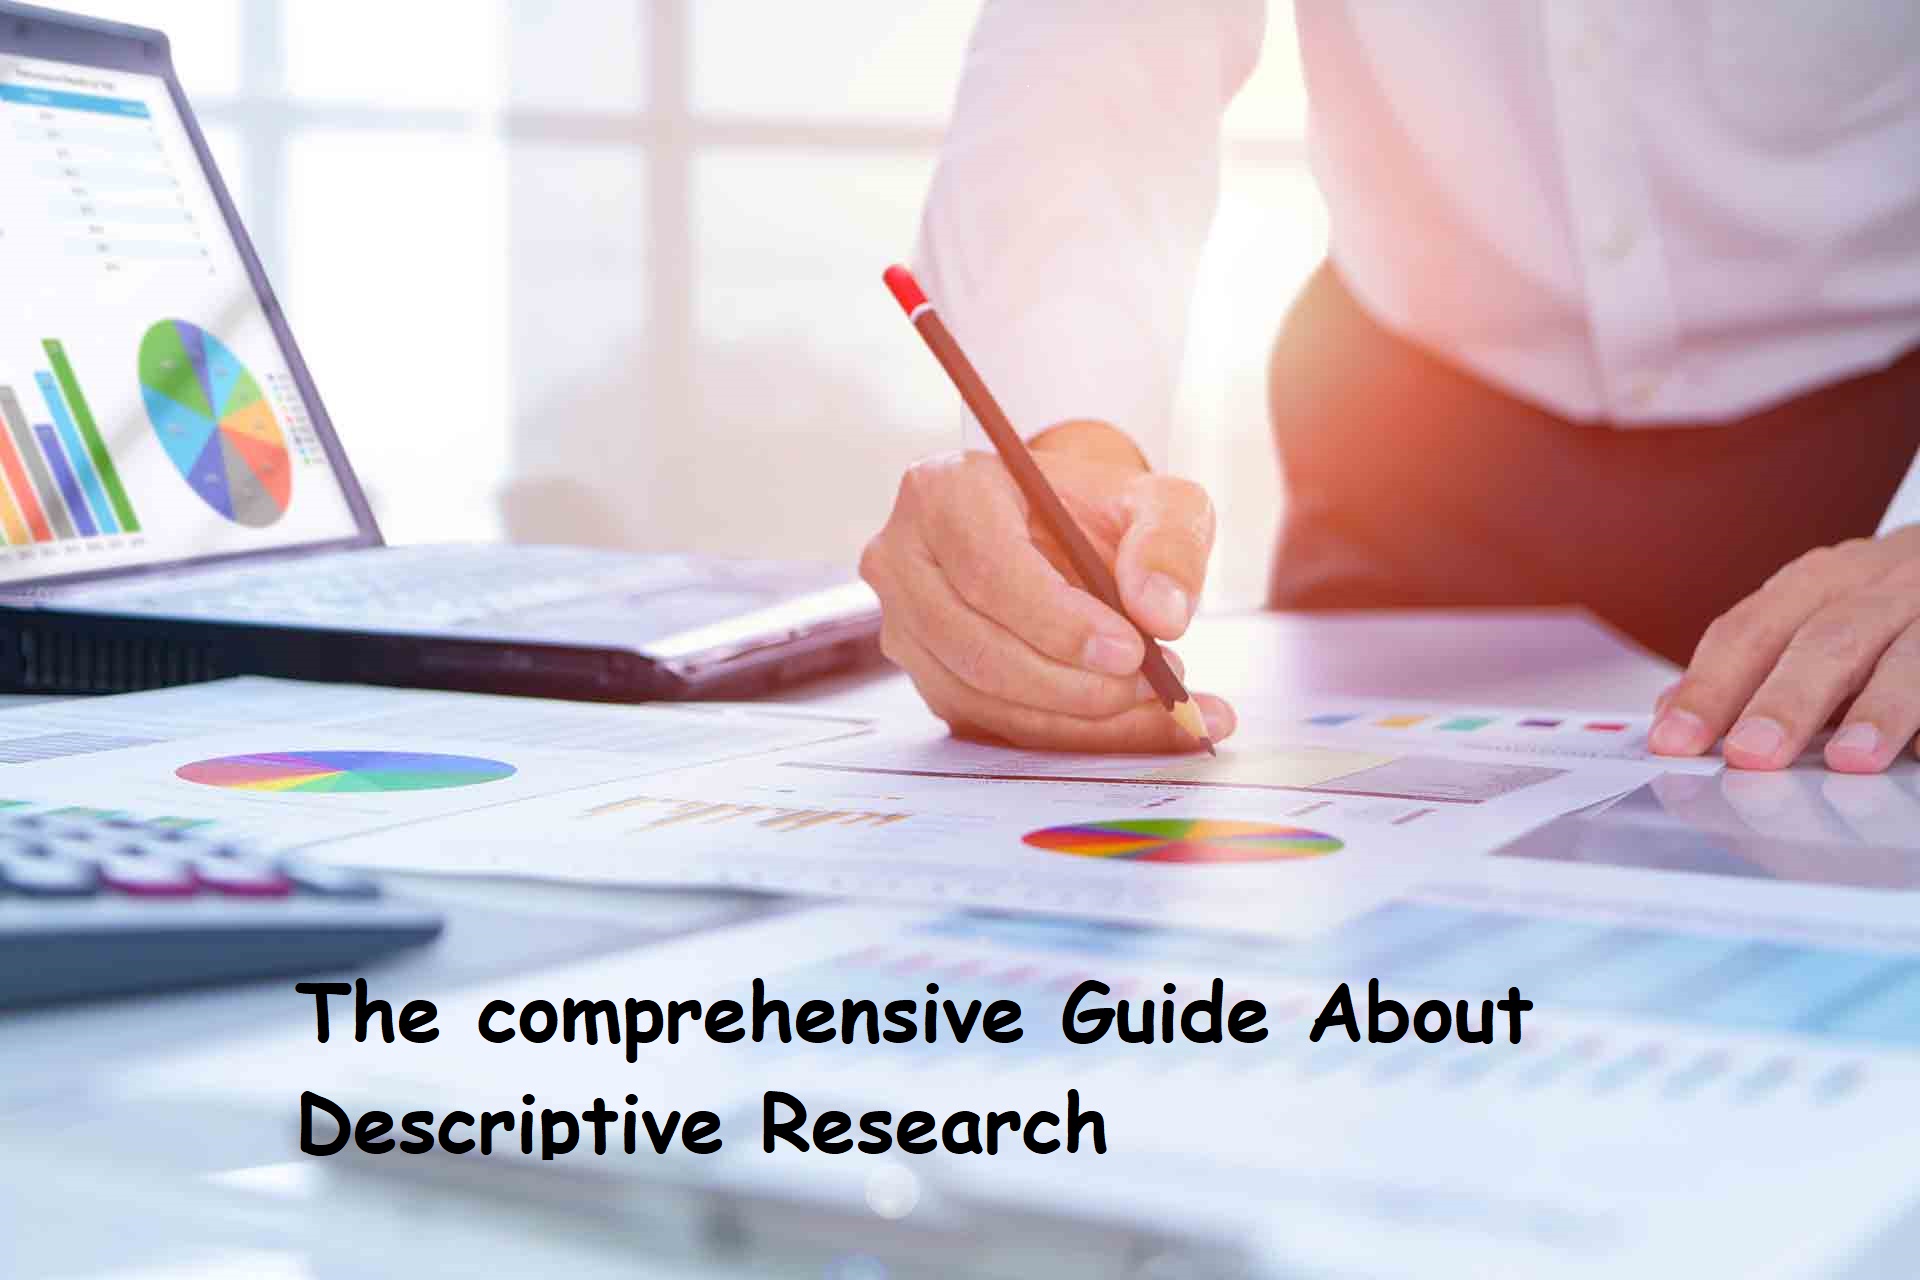 The comprehensive Guide About Descriptive Research